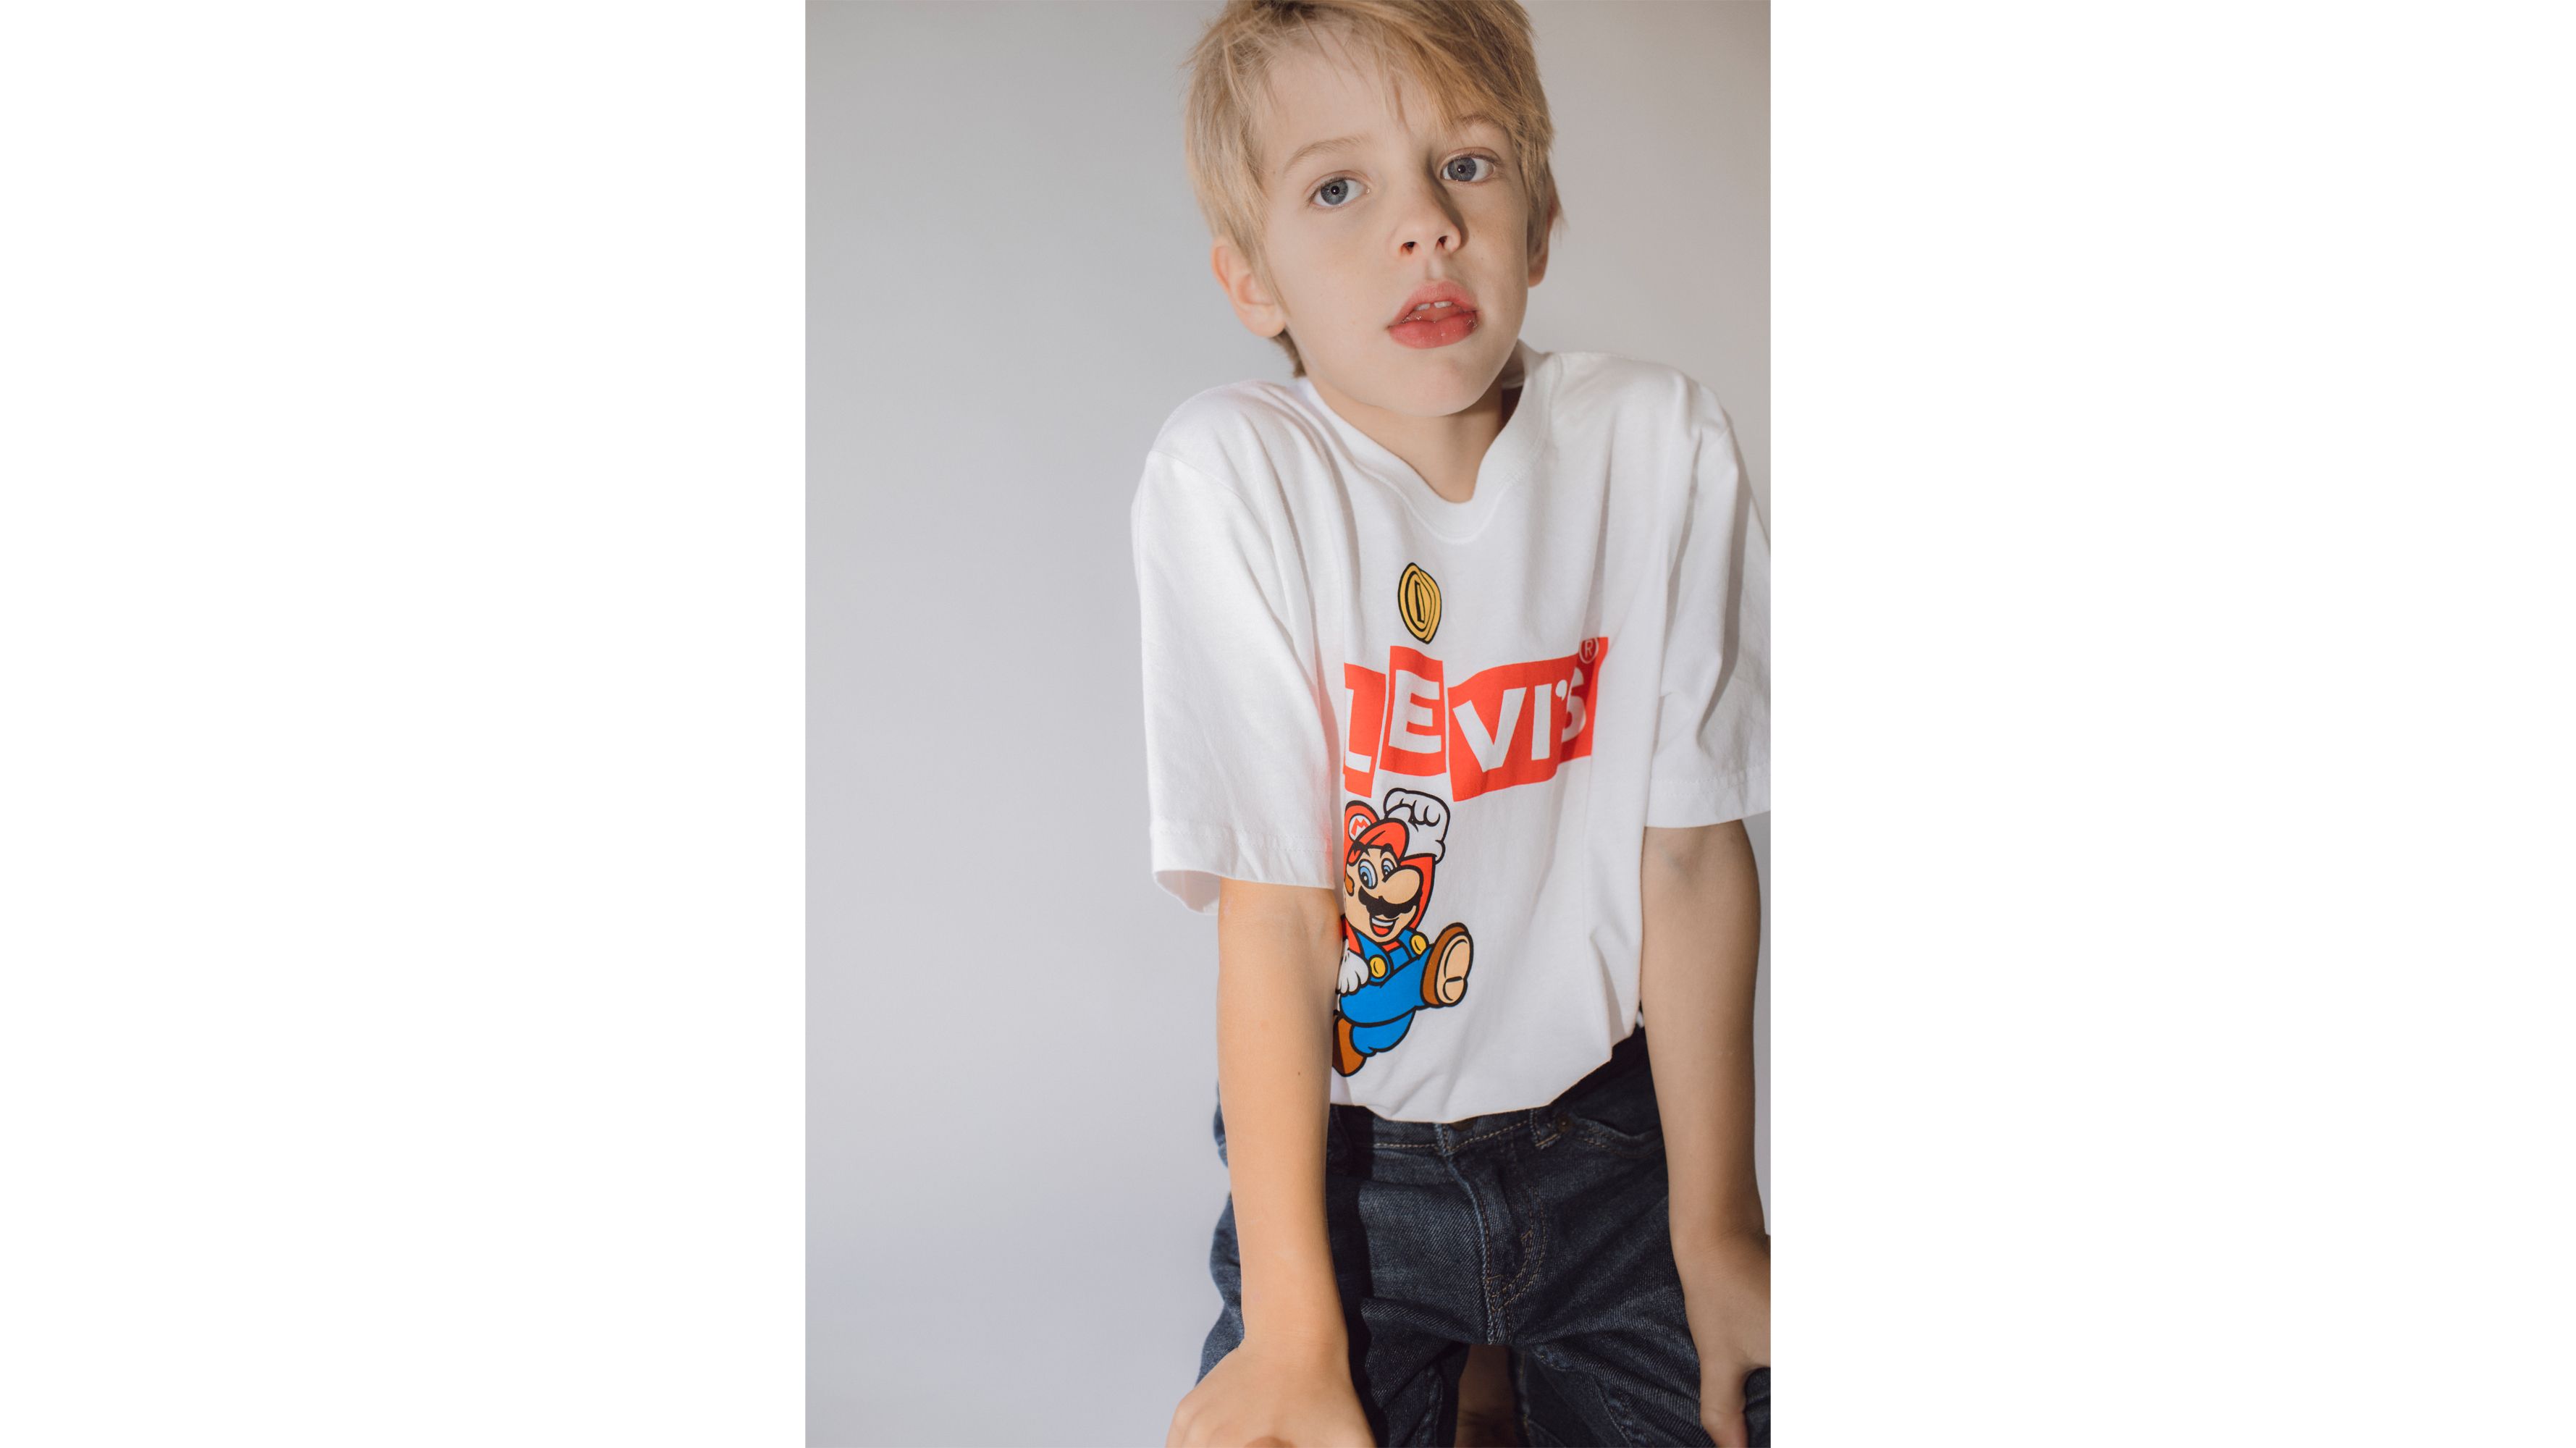 levis t shirt for kids